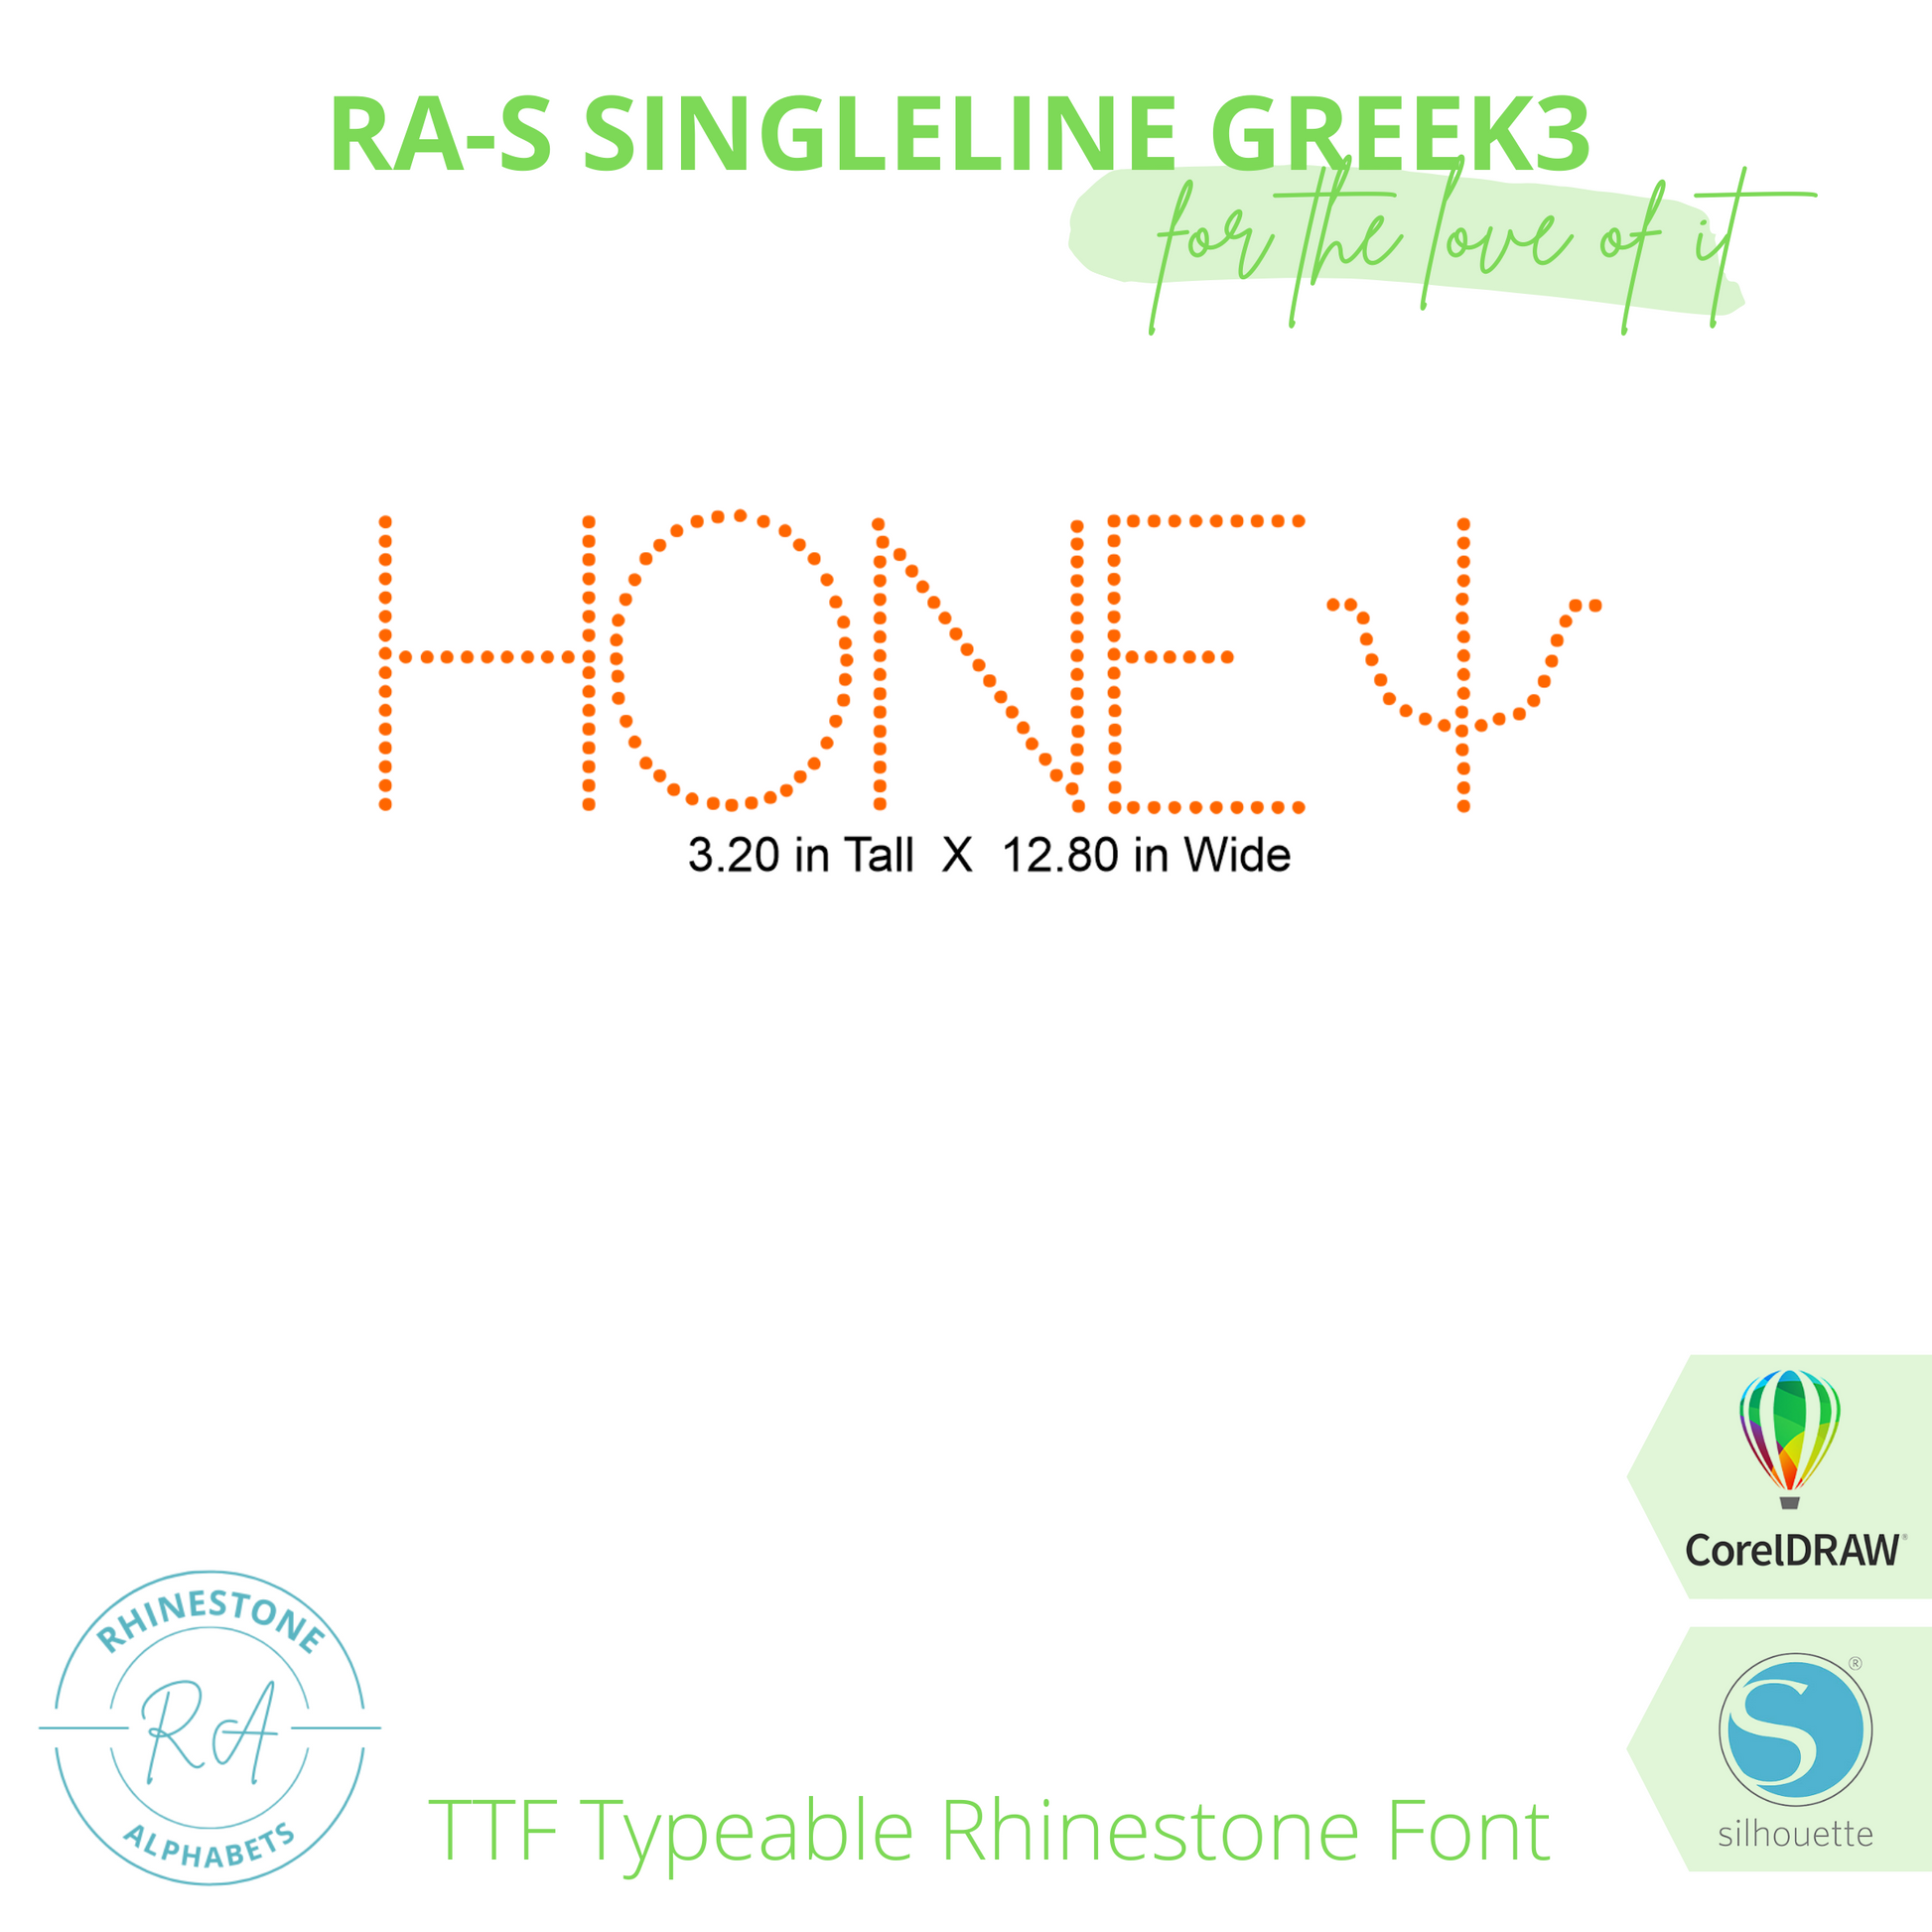 RA-S Singleline Greek 3 - RhinestoneAlphabets